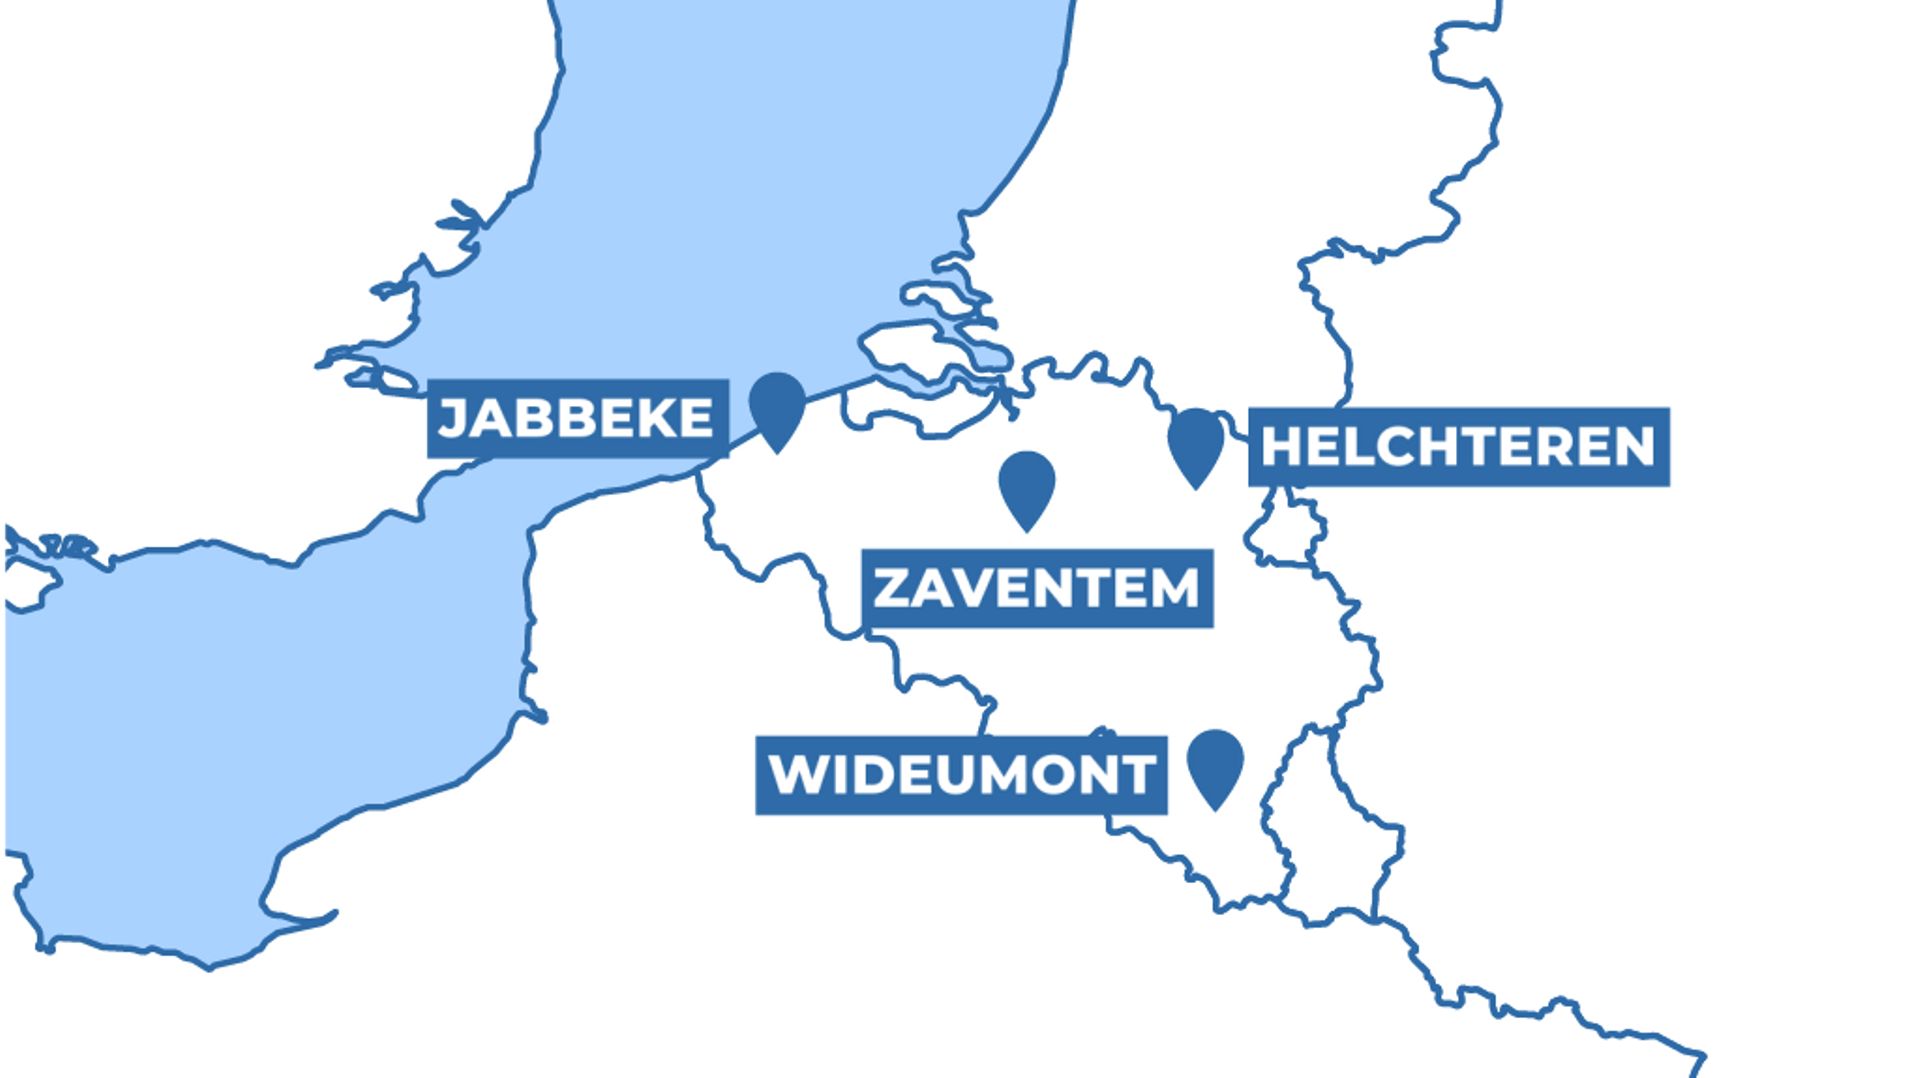 La Belgique compte 4 radars